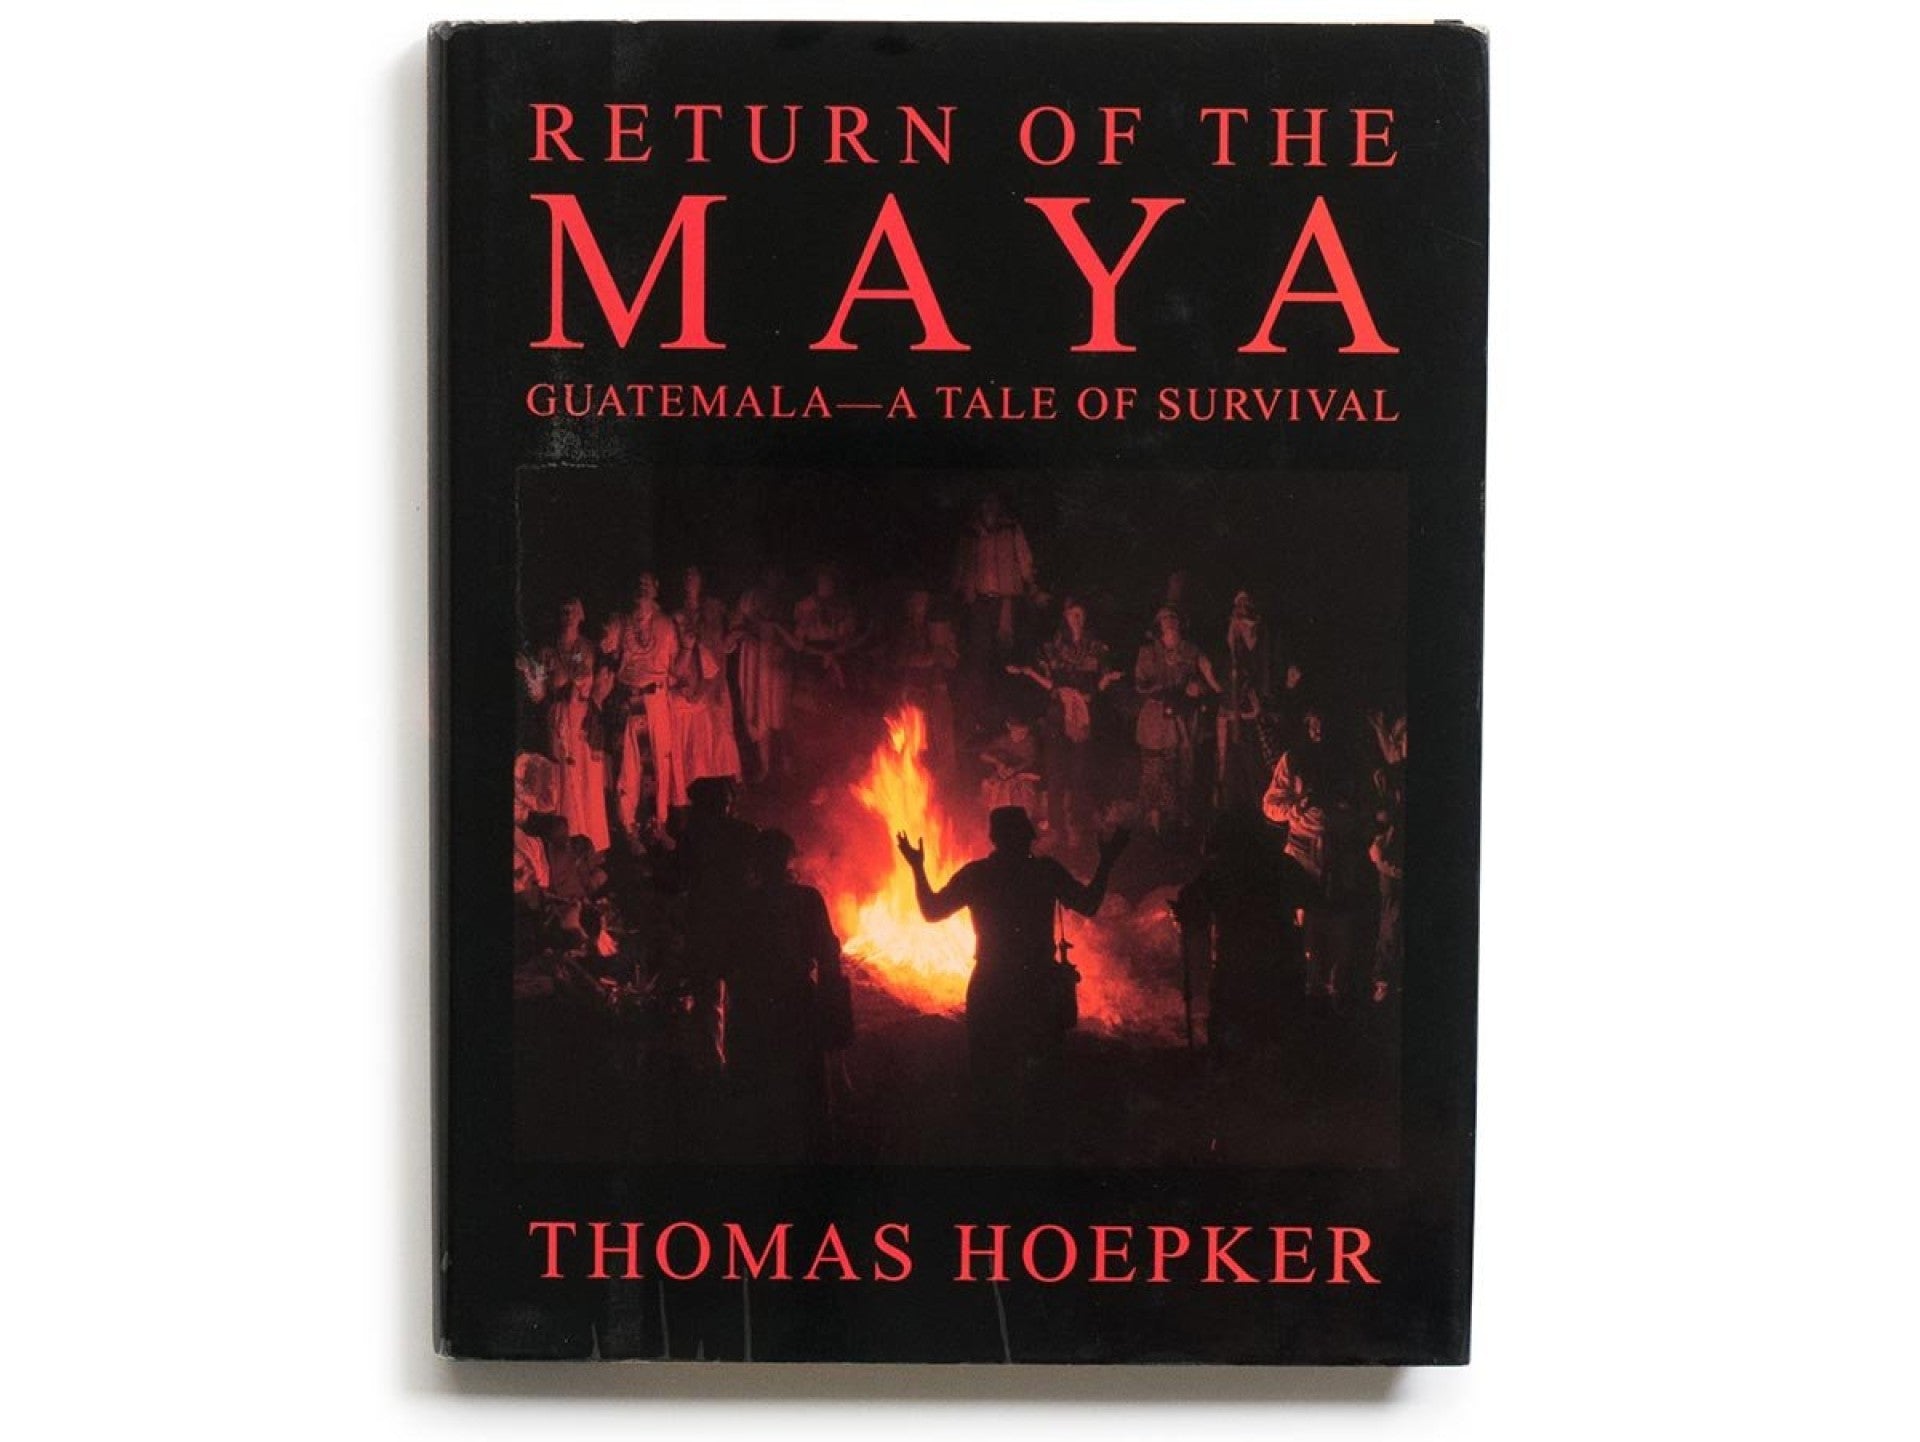 Return of the Maya